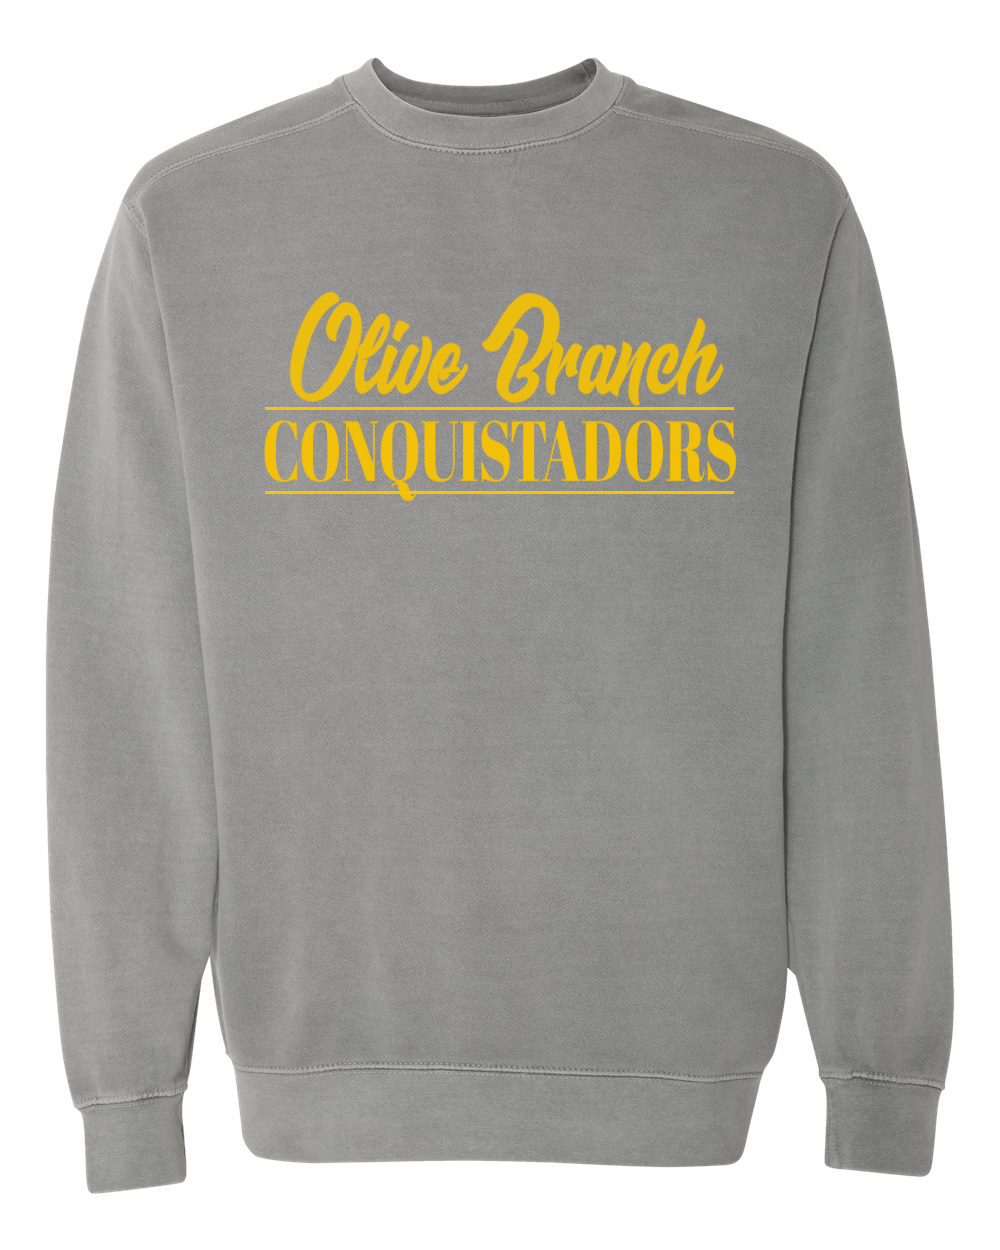 Olive Branch Conquistadors Comfort Colors Sweatshirts (Yellow Print)